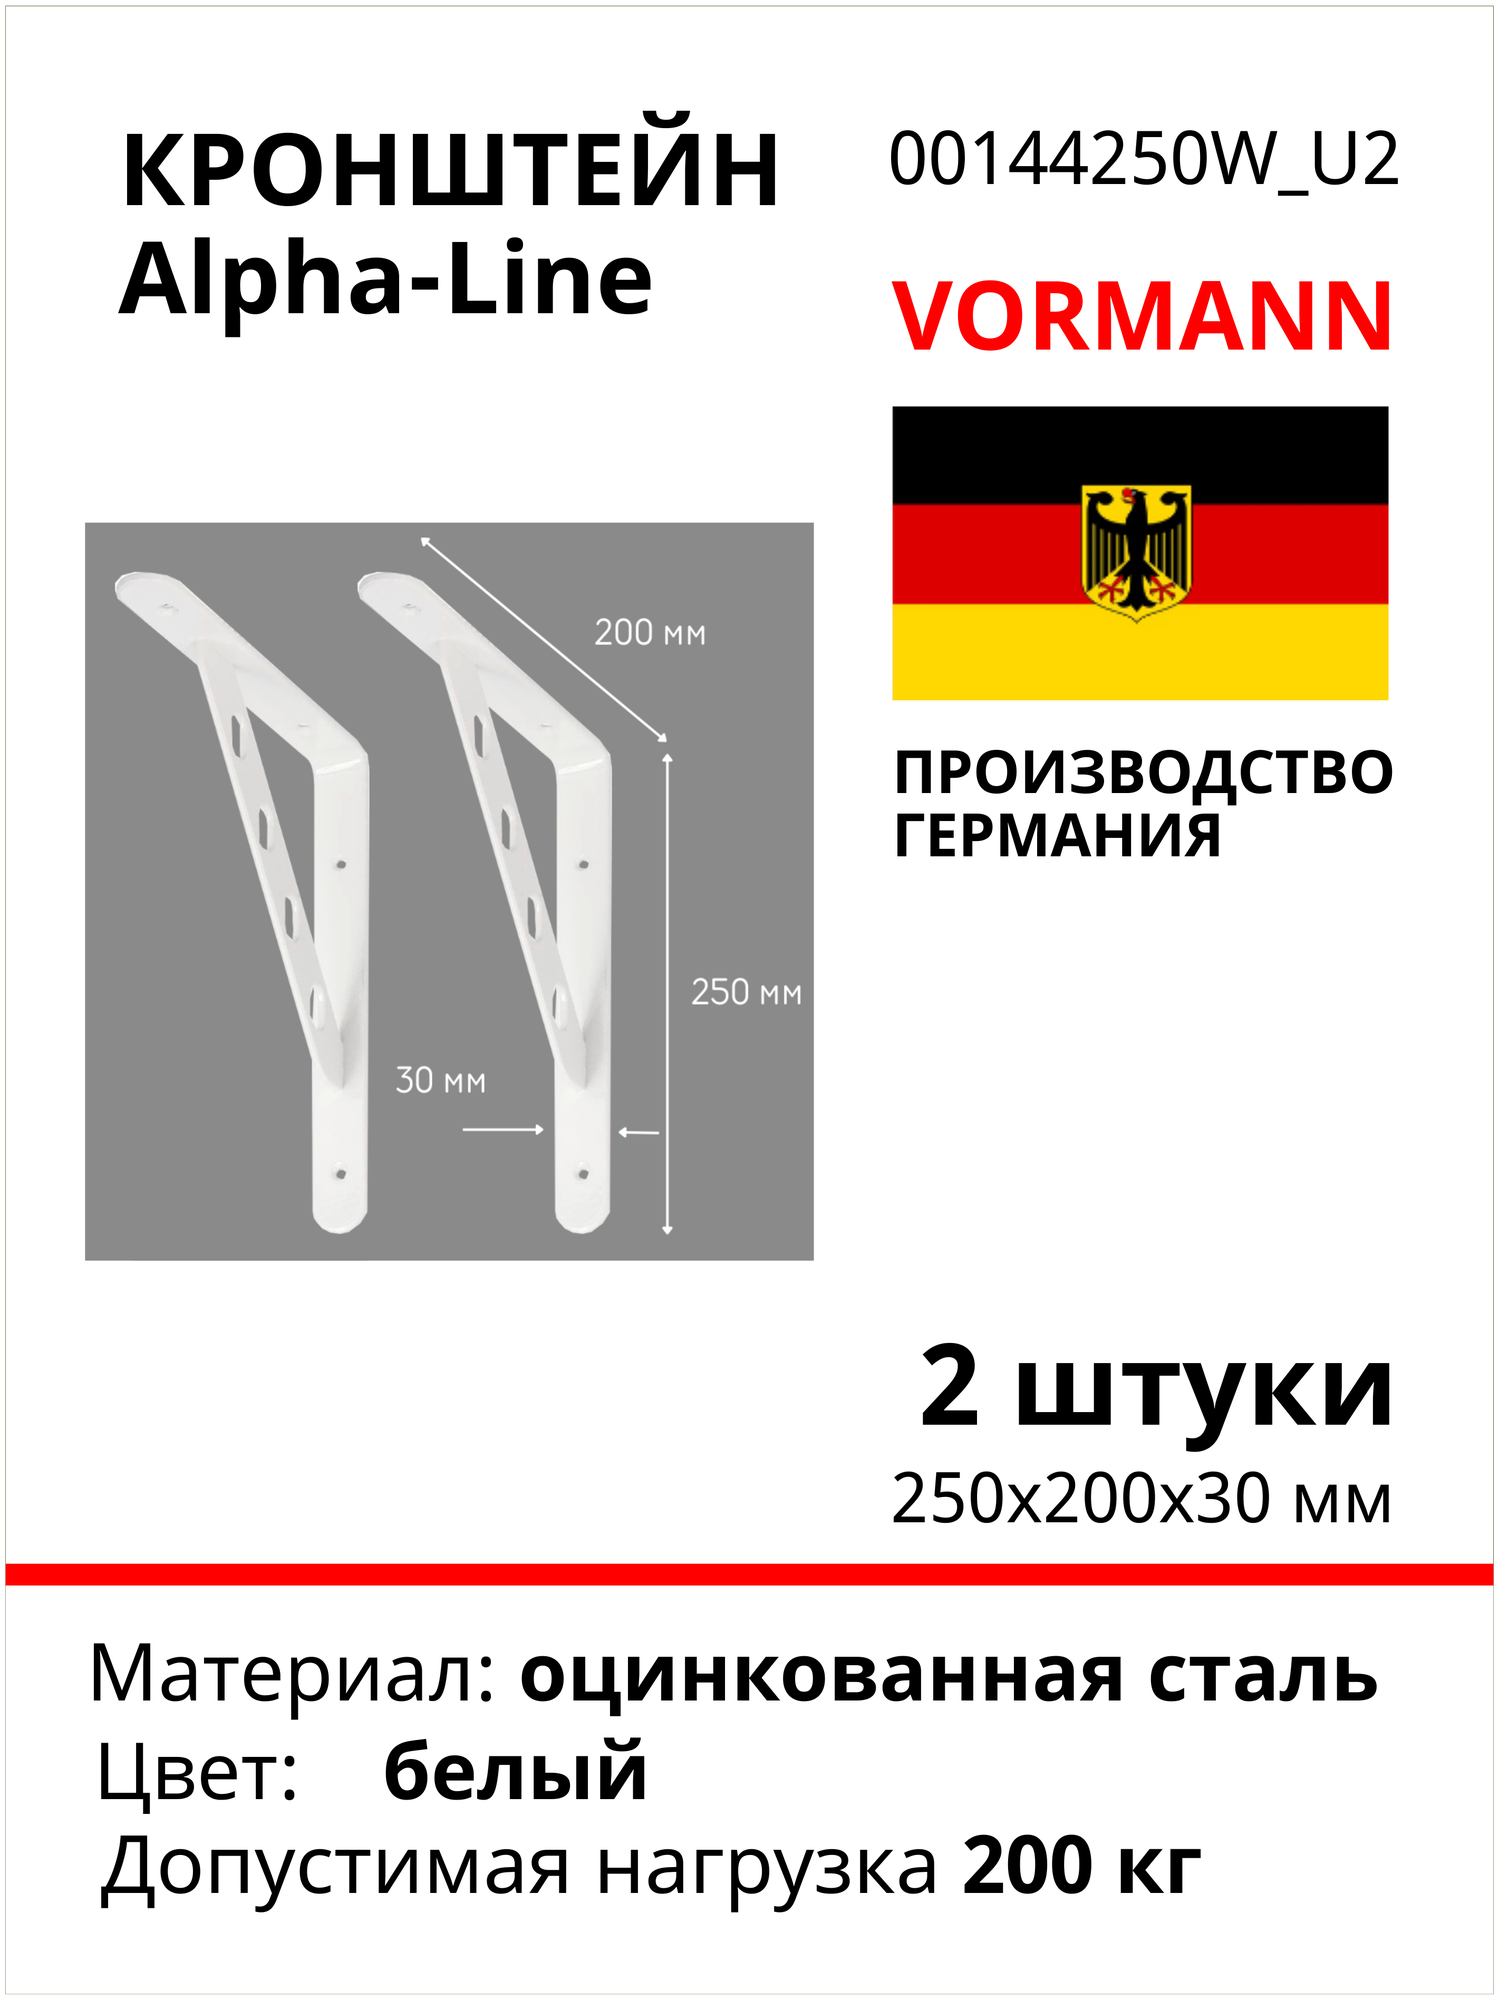 Кронштейн VORMANN Alpha-Line 250х200х30 мм, оцинкованный, цвет: белый, 200 кг 00144 250 W, 2 шт